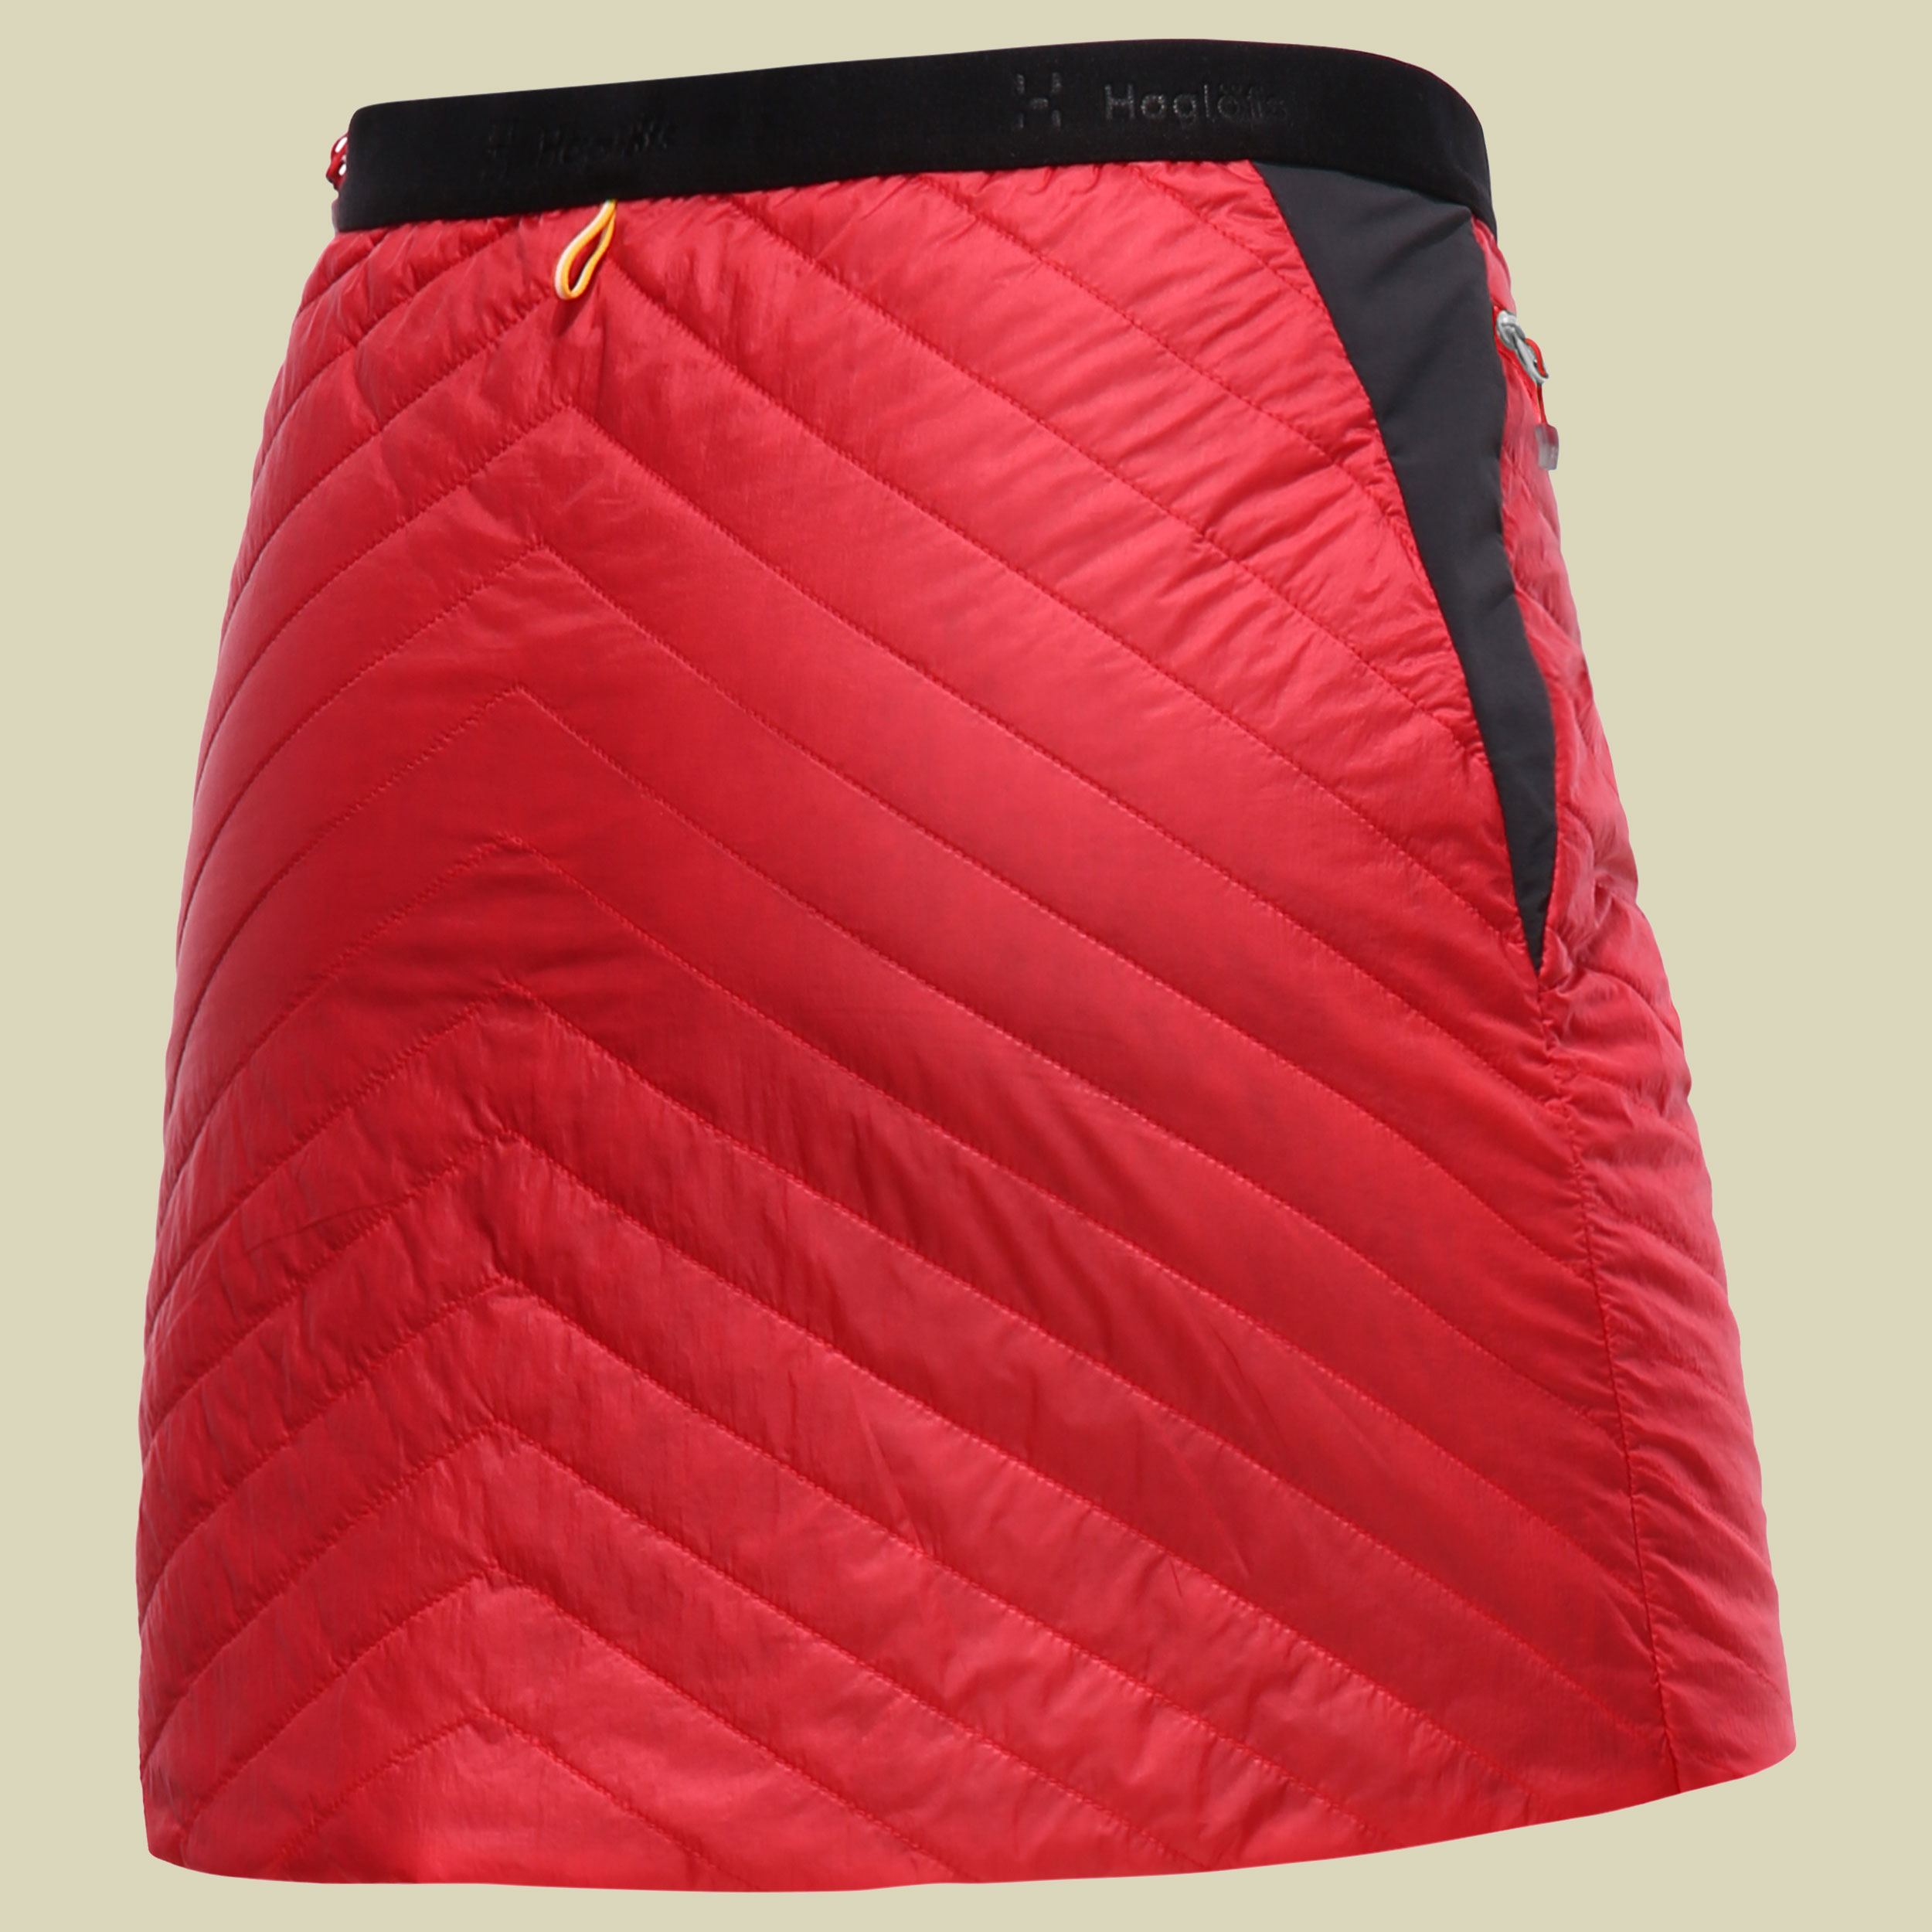 L.I.M. Barrier Skirt Women Größe L Farbe hibiscus red